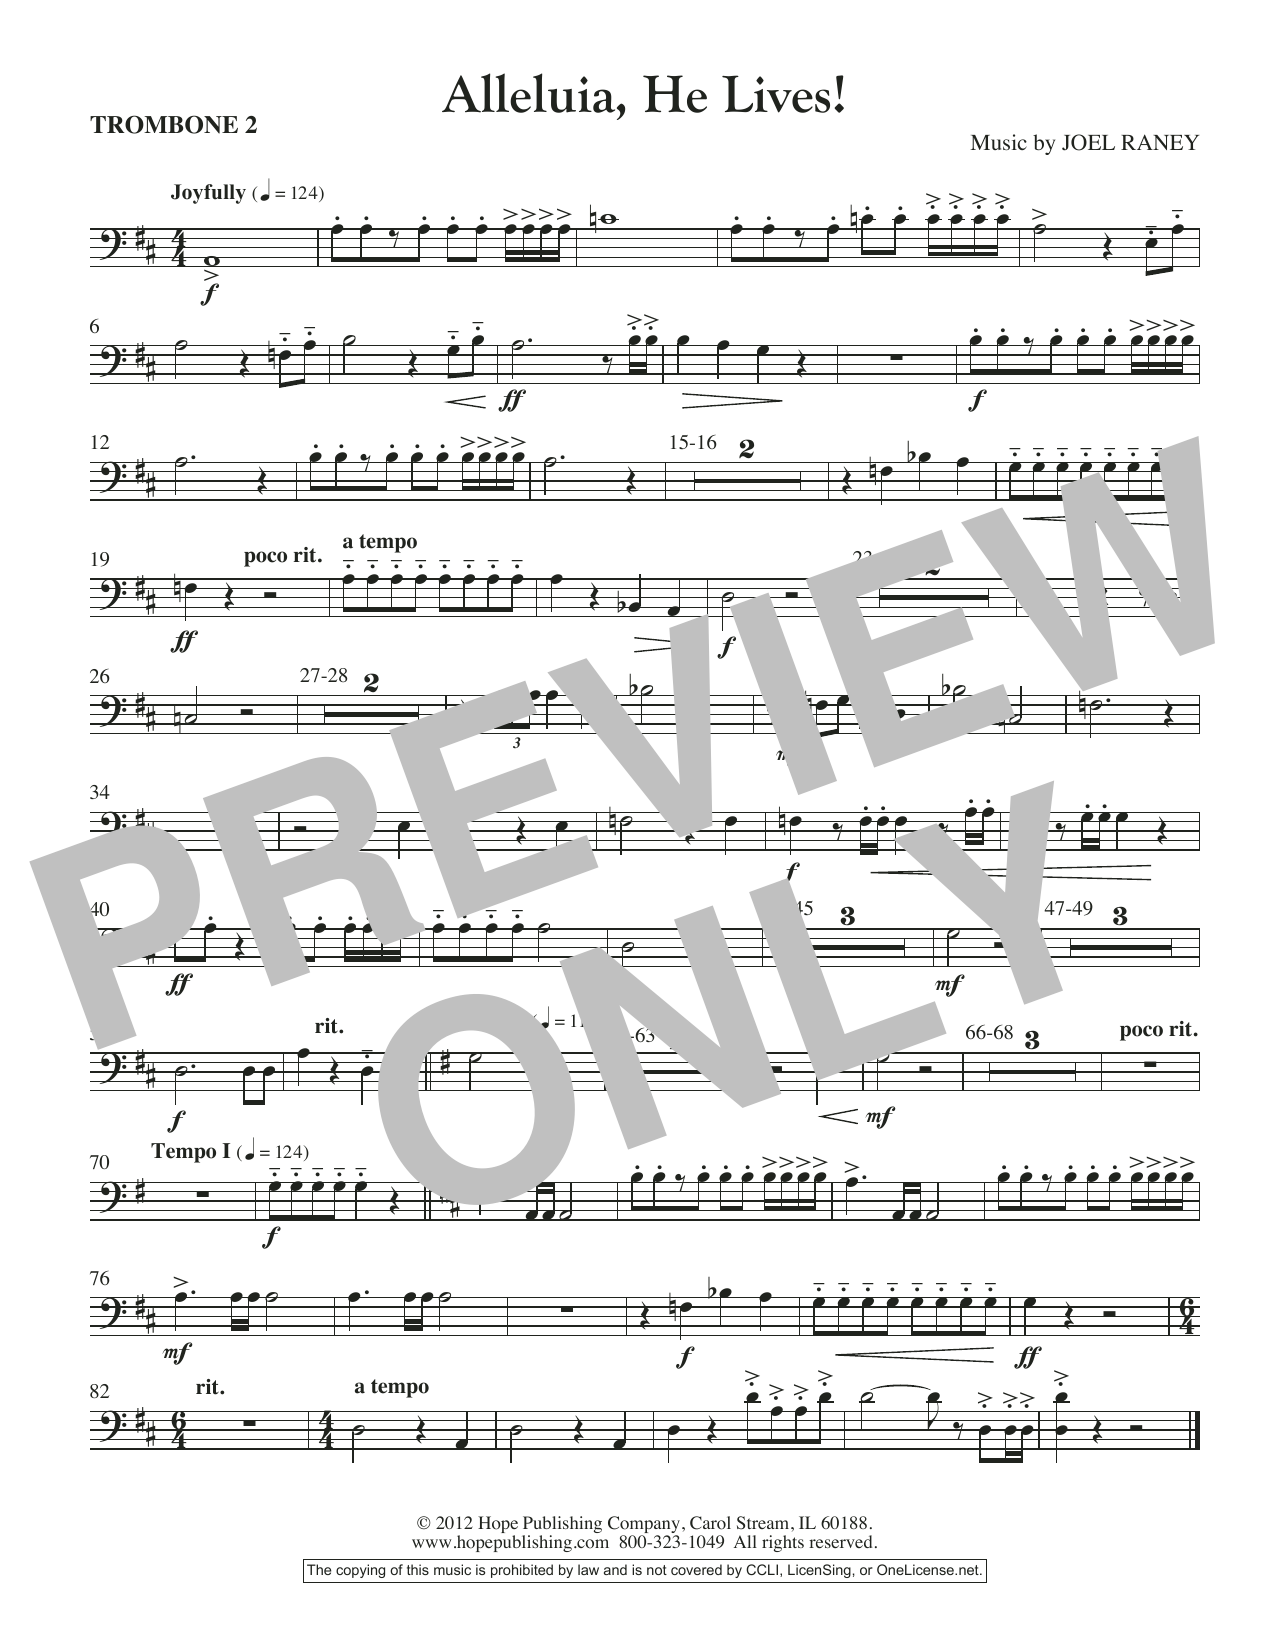 Download Joel Raney Alleluia, He Lives - Trombone 2 Sheet Music and learn how to play Choir Instrumental Pak PDF digital score in minutes